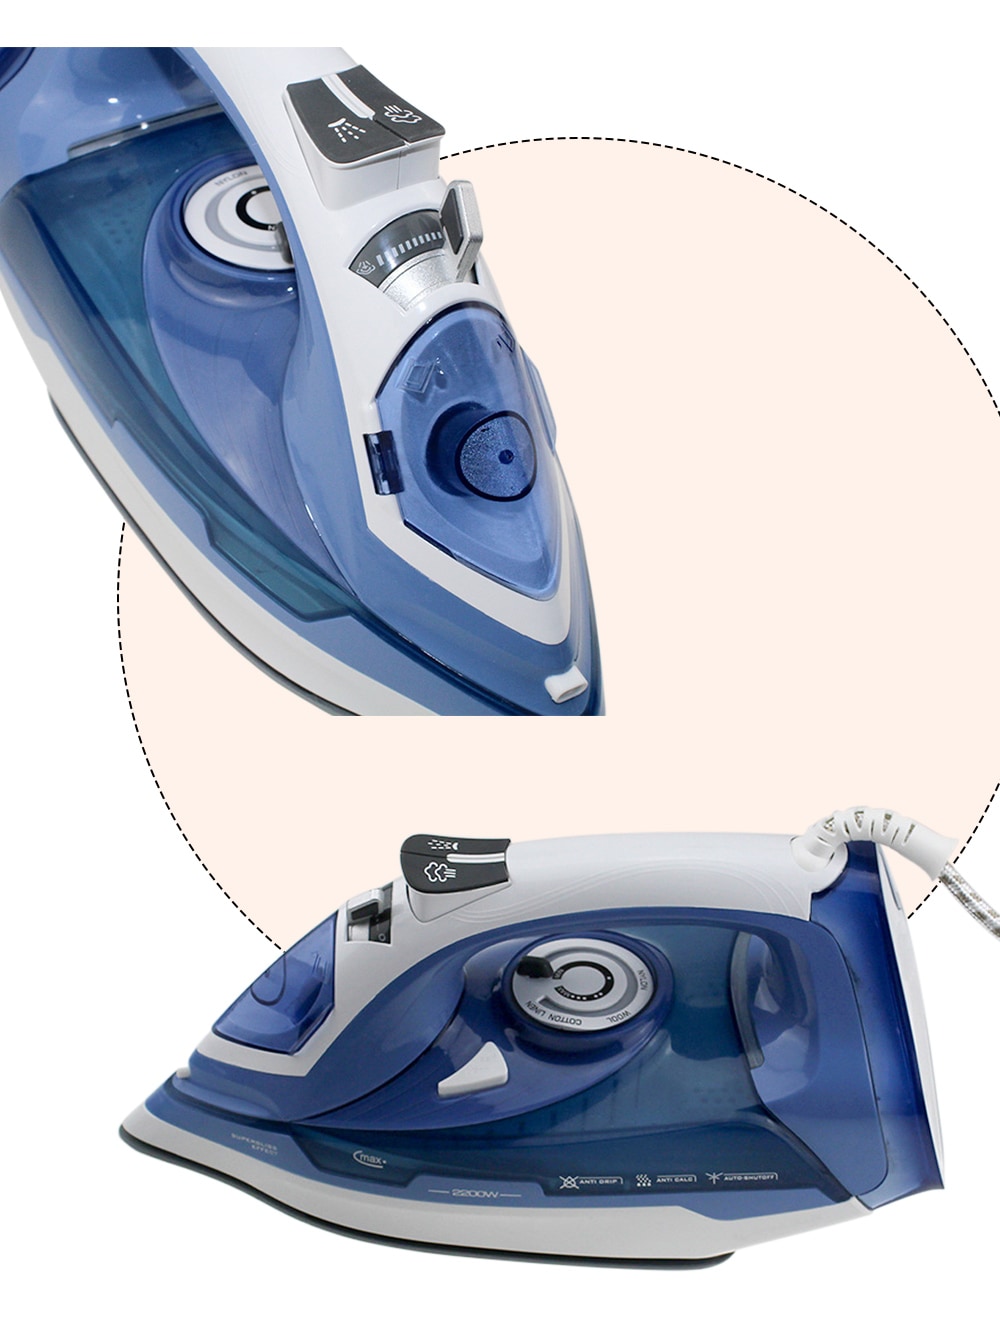 Soarin Ceramic Electric Iron Handheld Household Steam Flatiron- Cornflower Blue EU Plug